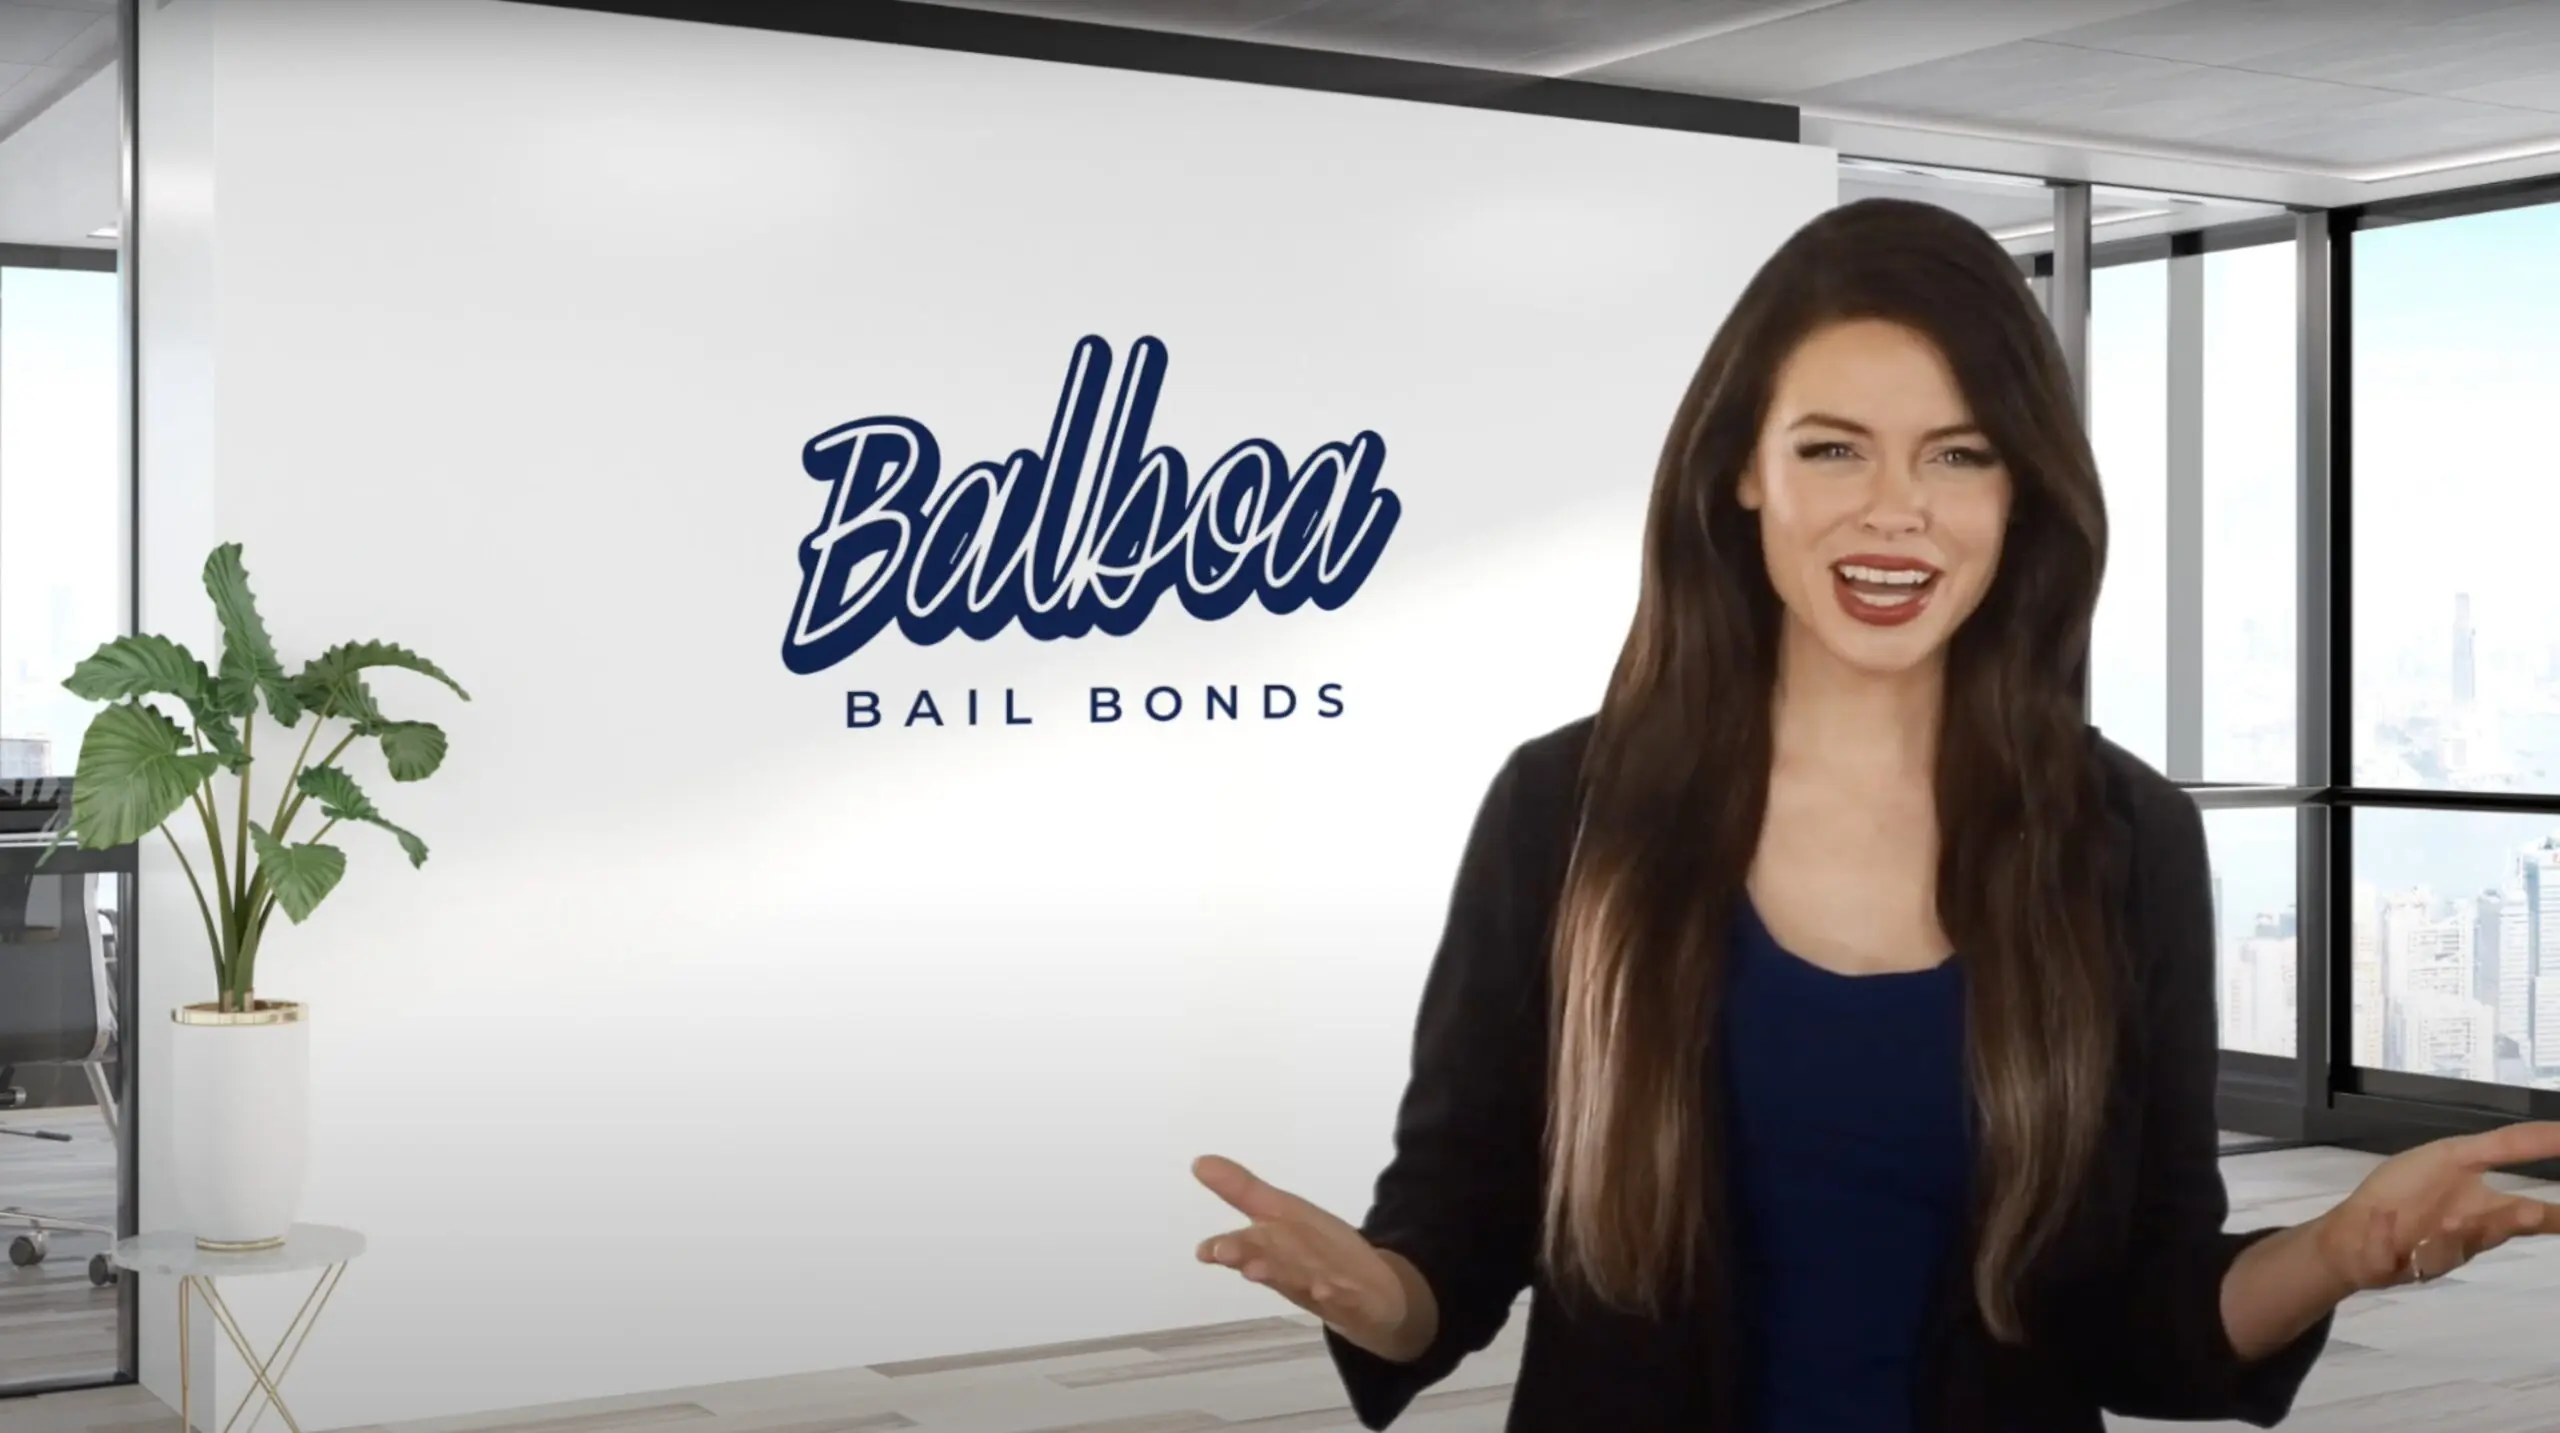 Under Arrest? Just Call the Best at Balboa Bail Bonds!